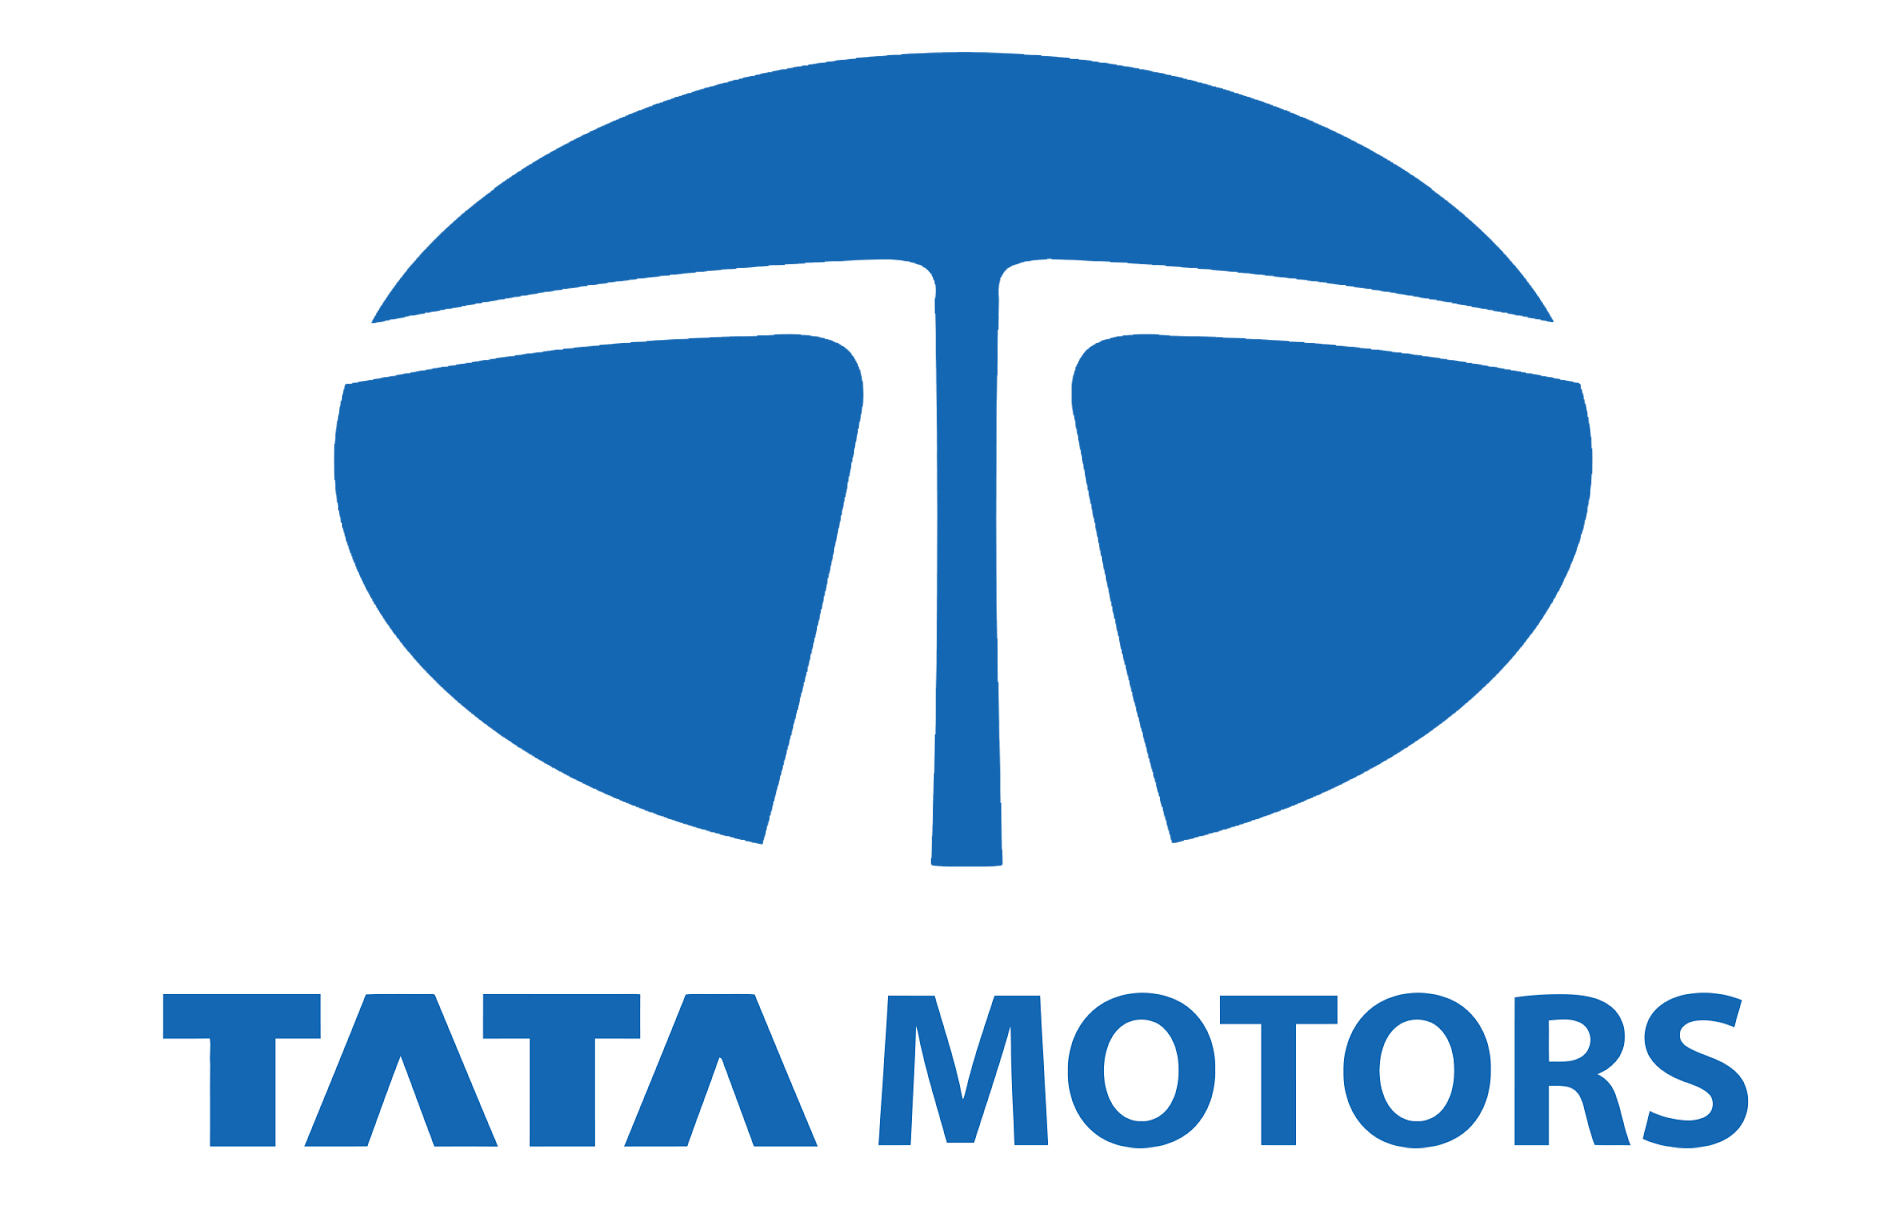 Tata Motors Cars Showroom - Fairdeal Motors - Logo